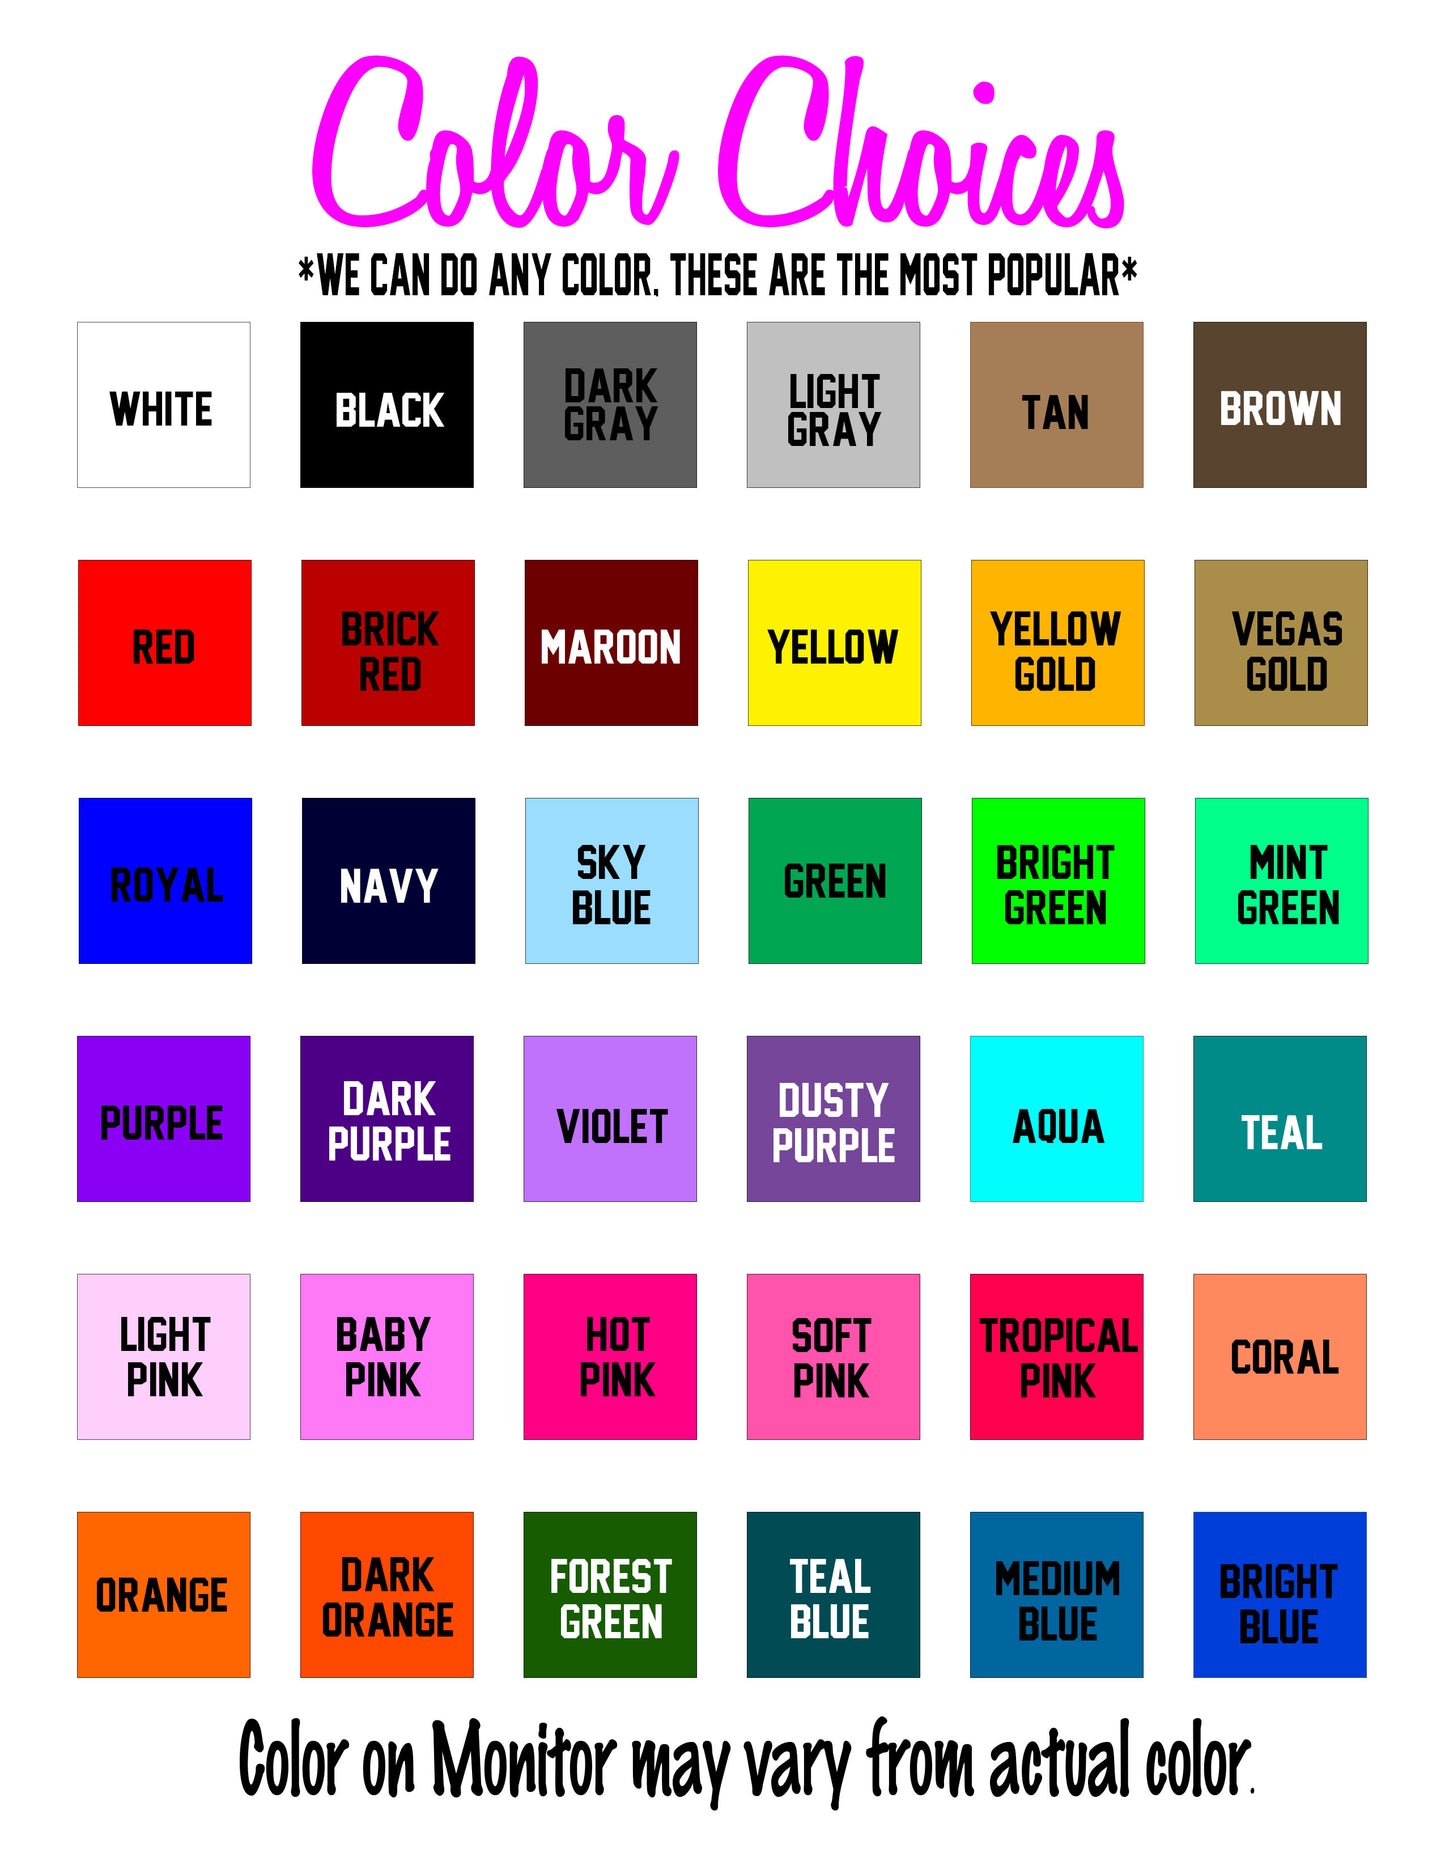 Personalized Rainbow Crew Socks